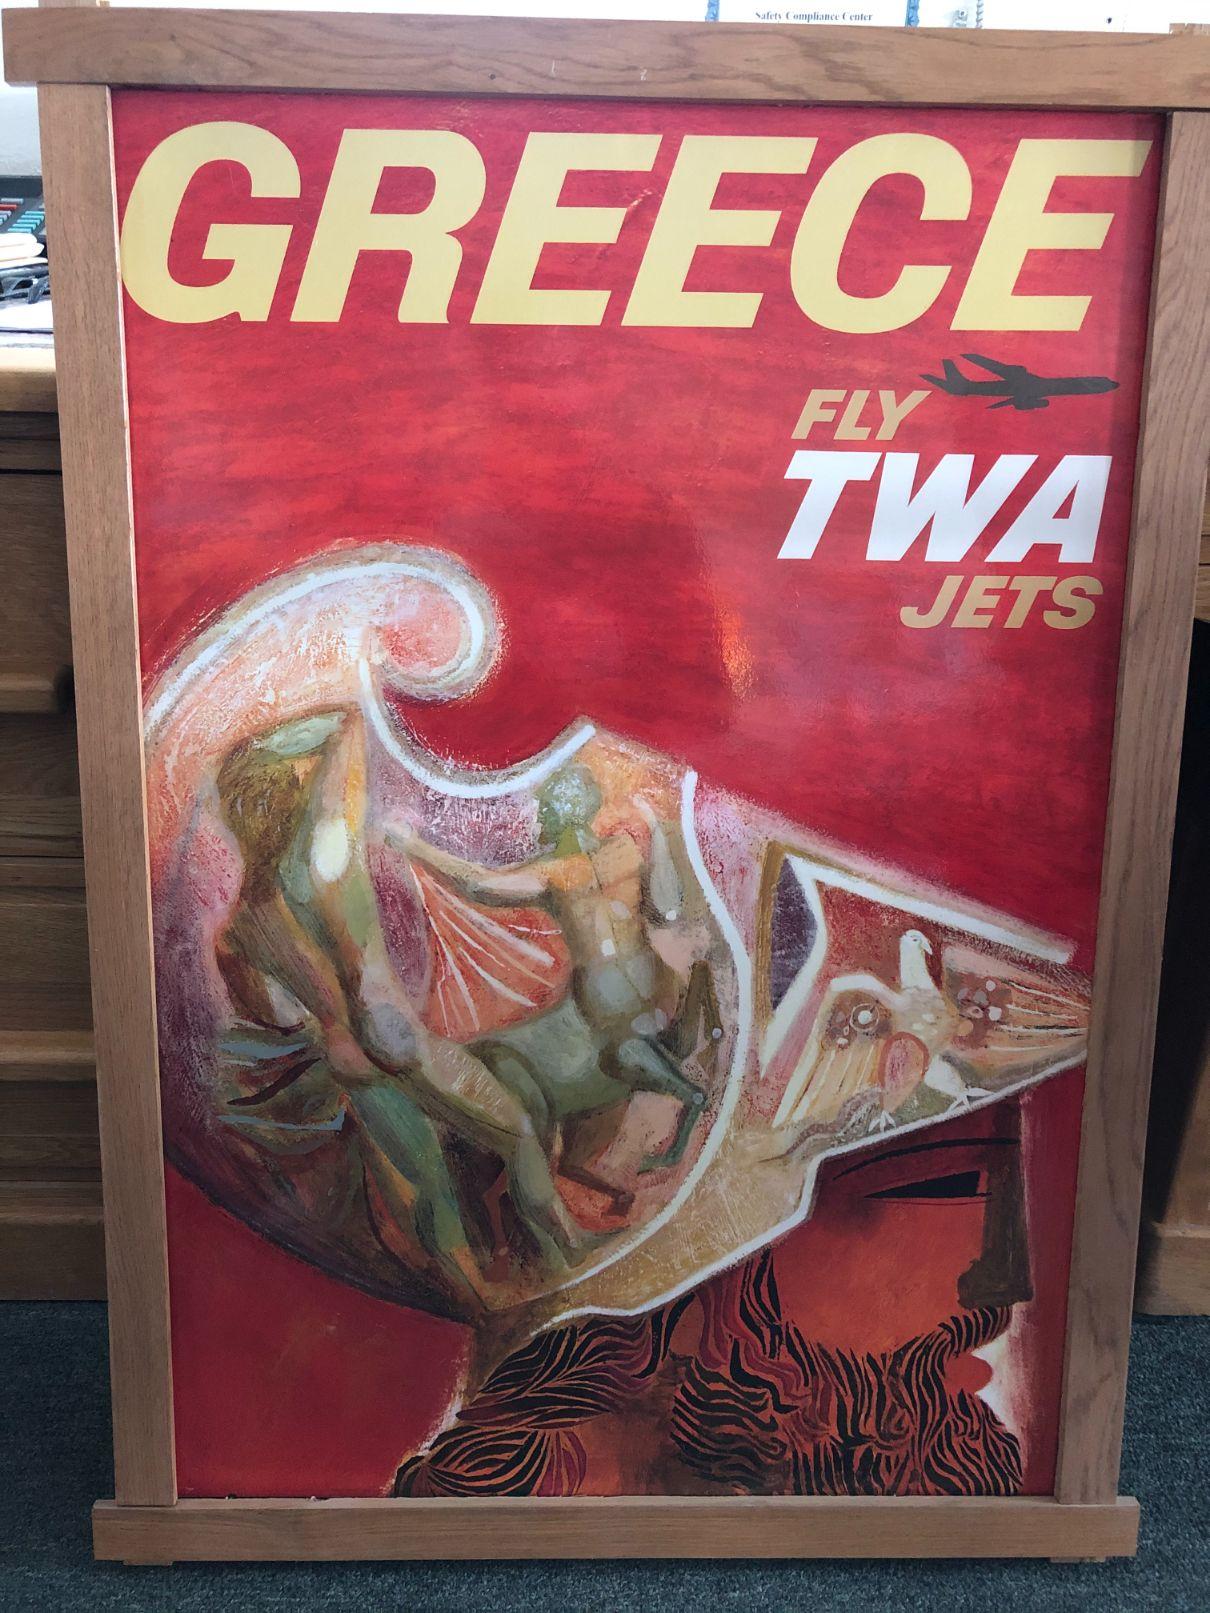 Vintage TWA "Greece / Fly TWA Jets" Travel Poster